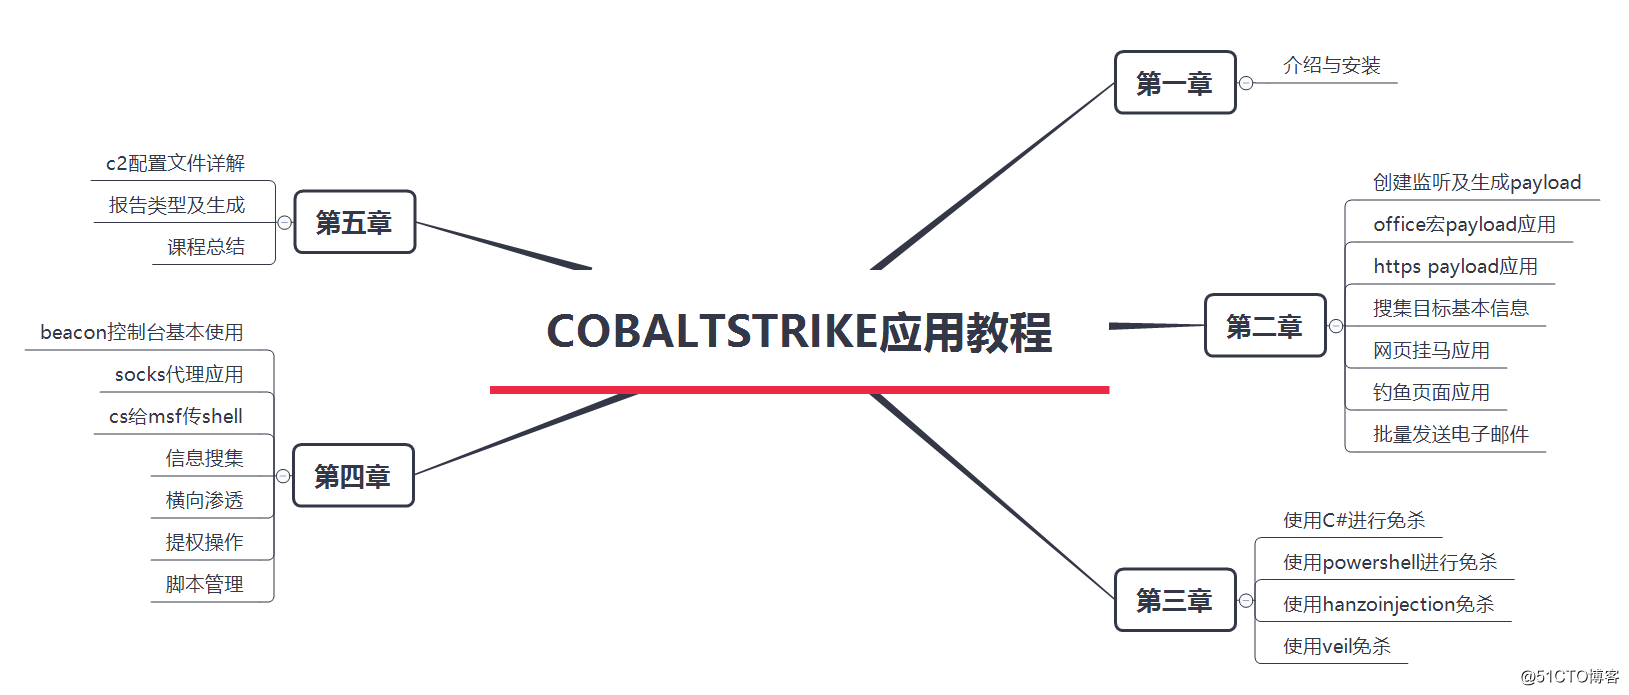 CobaltStrike Application Tutorial